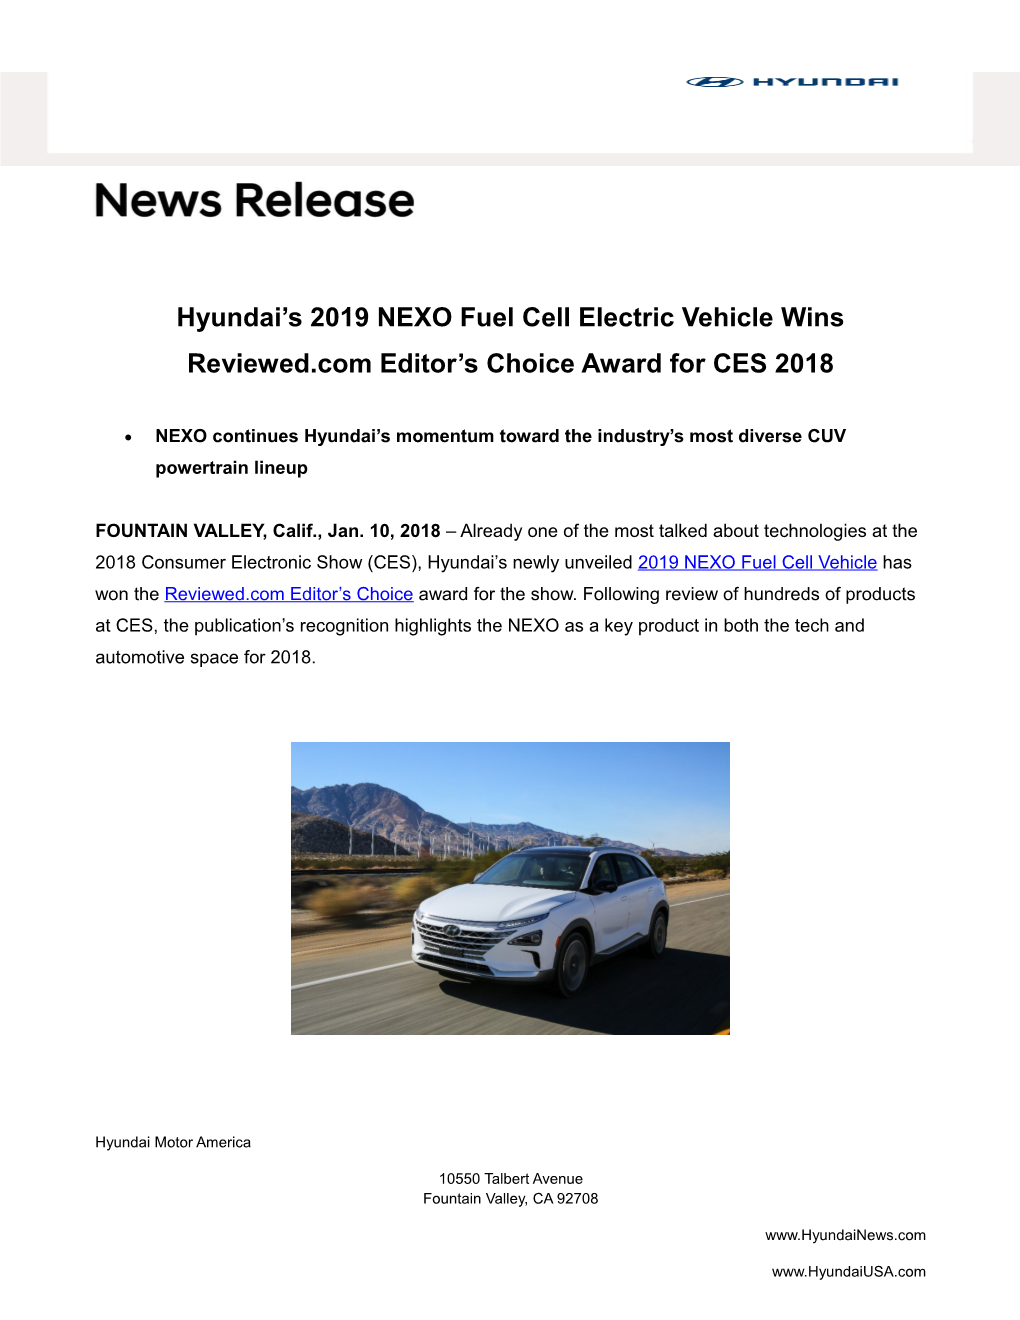 Hyundai S 2019 NEXO Fuel Cell Electric Vehicle Wins Reviewed.Com Editor S Choice Award